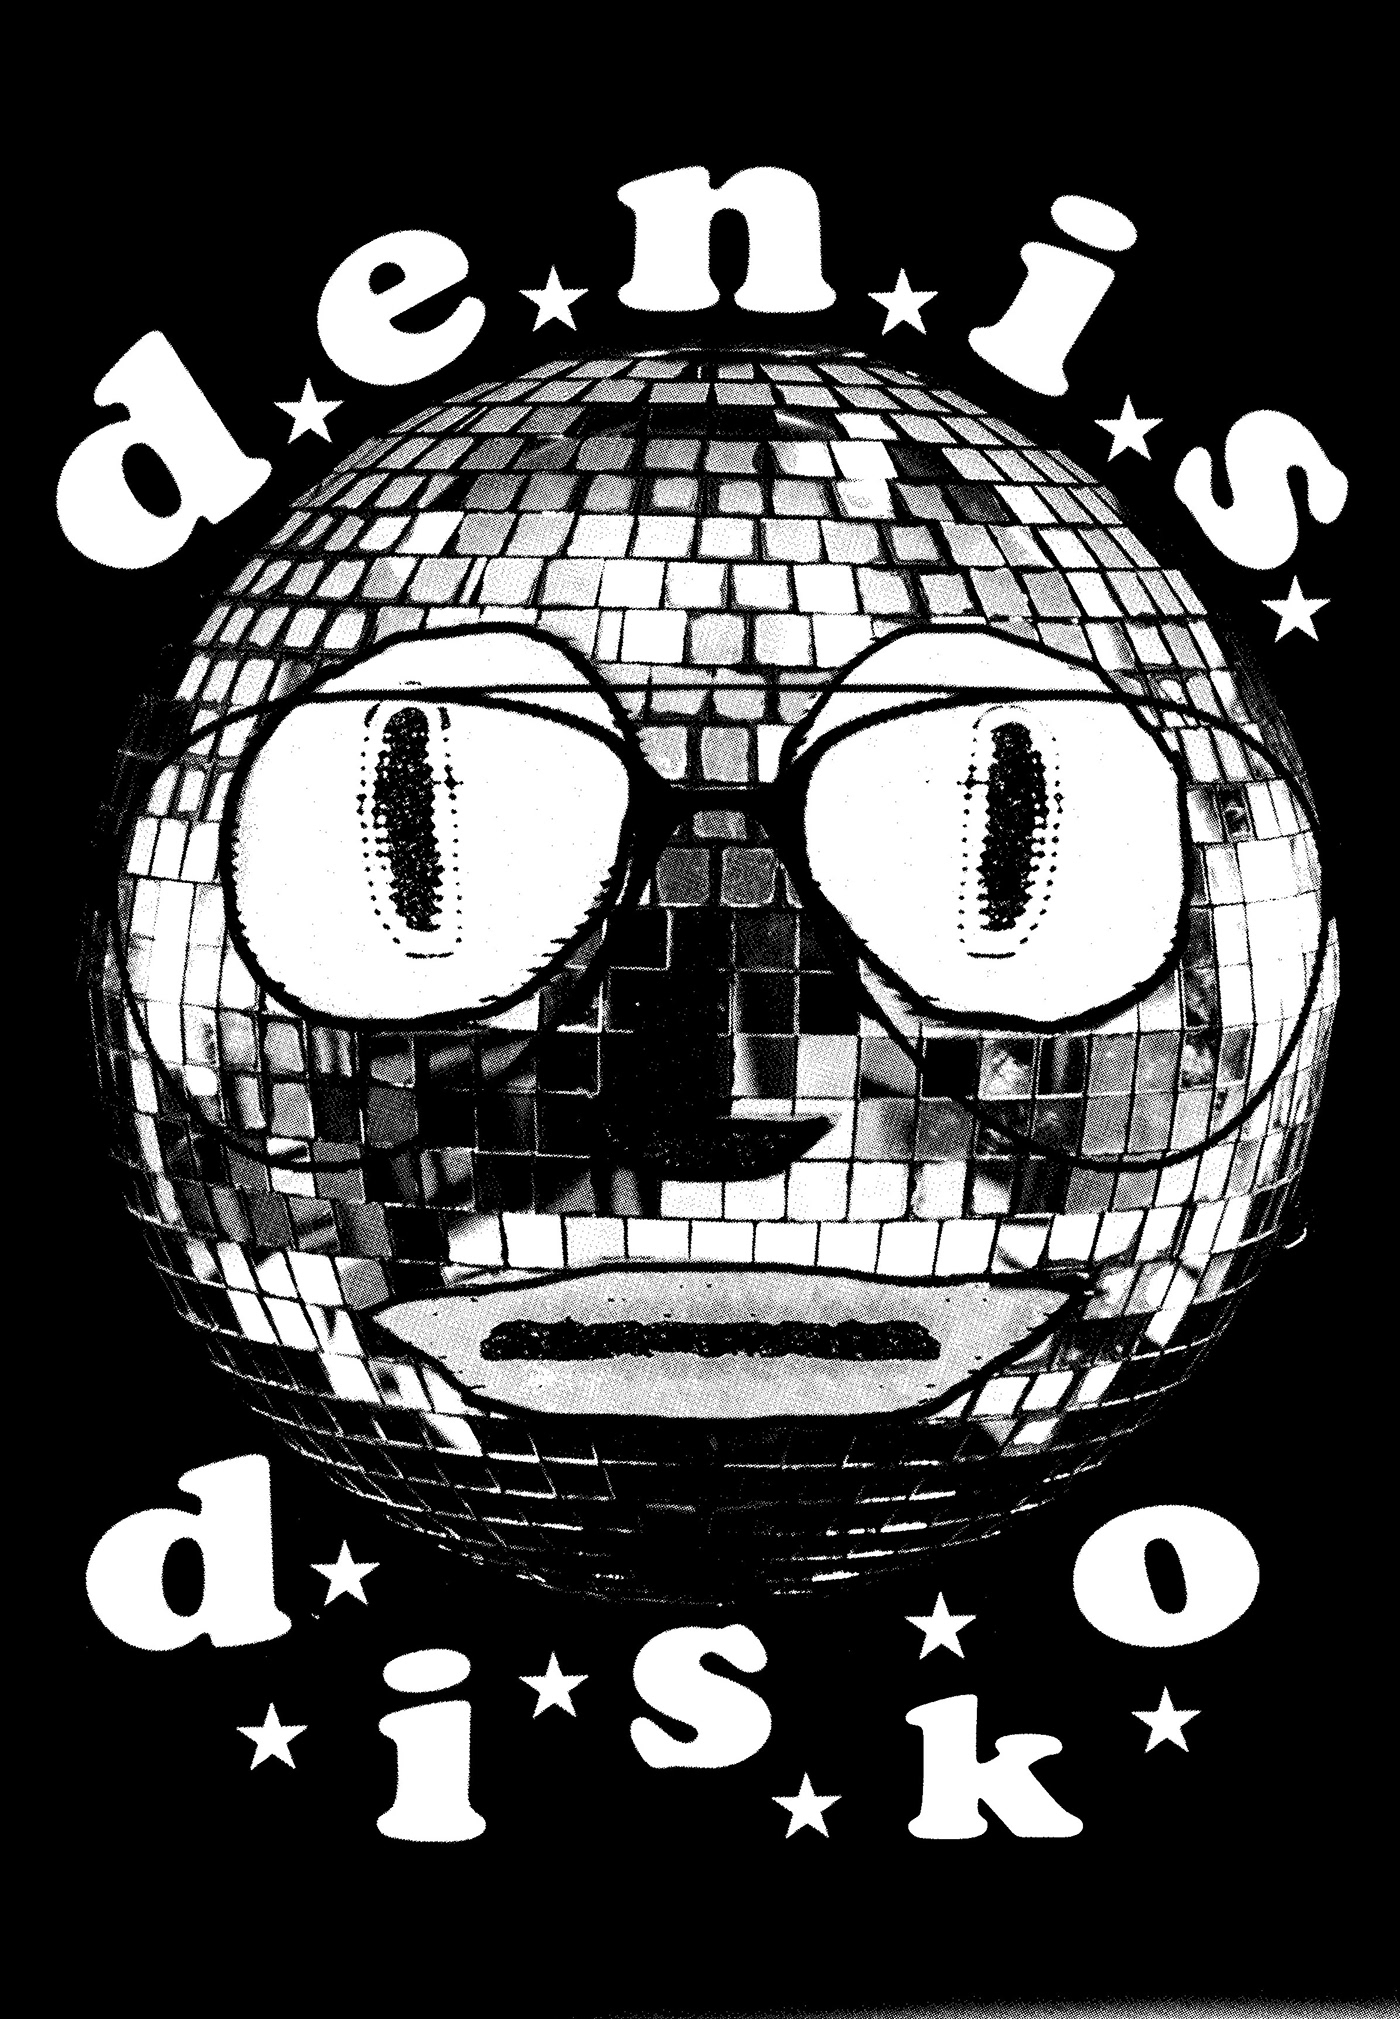 t-shirt merchandise Clothing xerox art Digital Collage Digital Art  punk rock disco